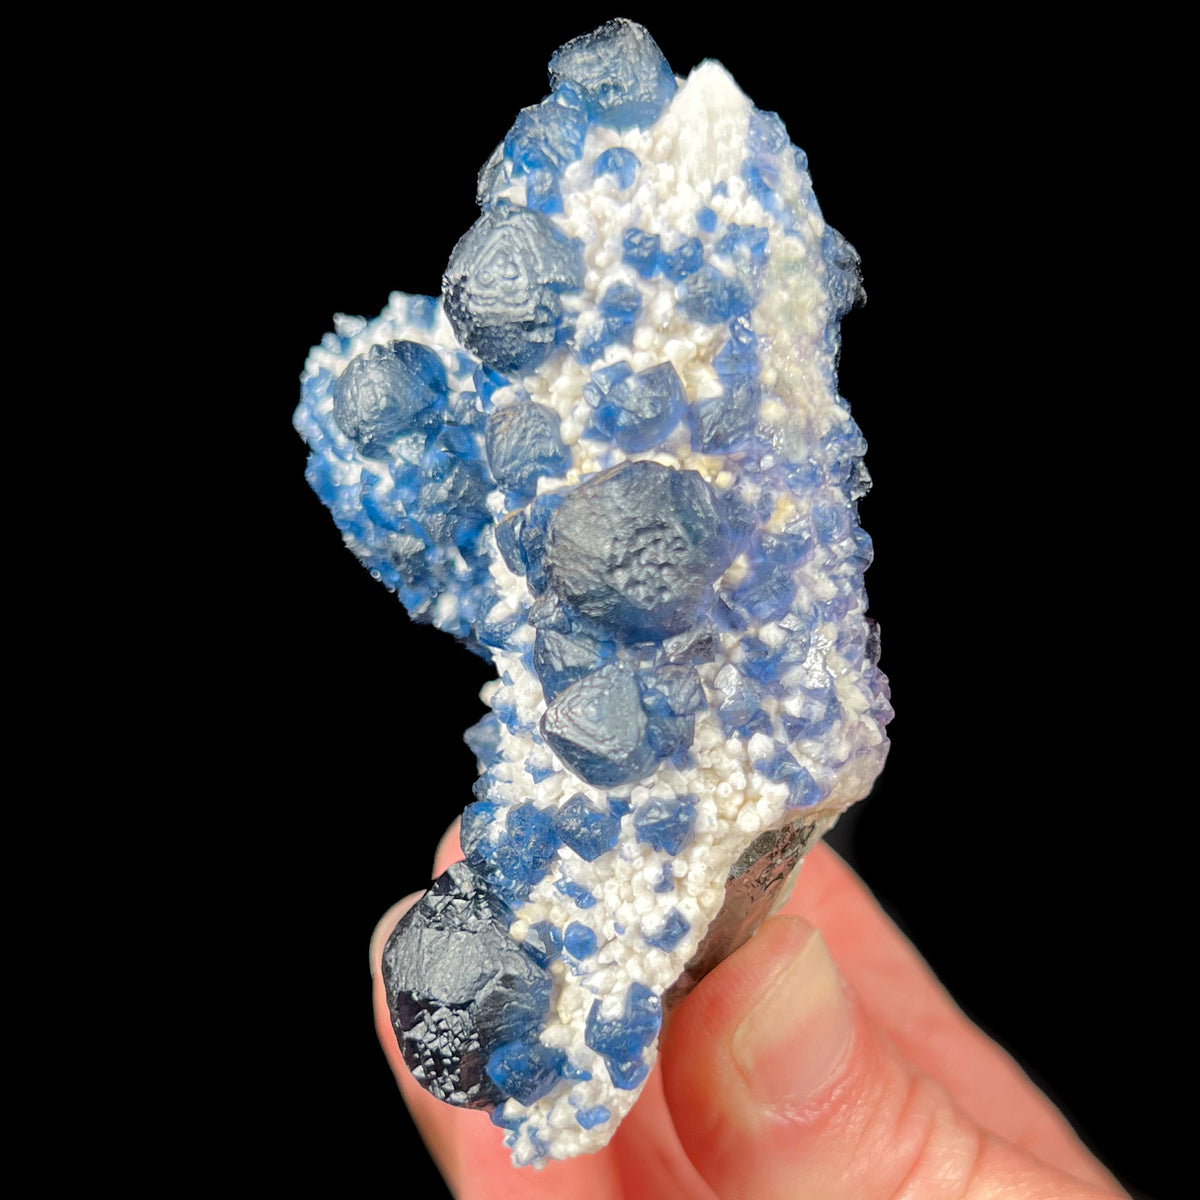 Blue Fluorite blueberries on white Quartz crystals